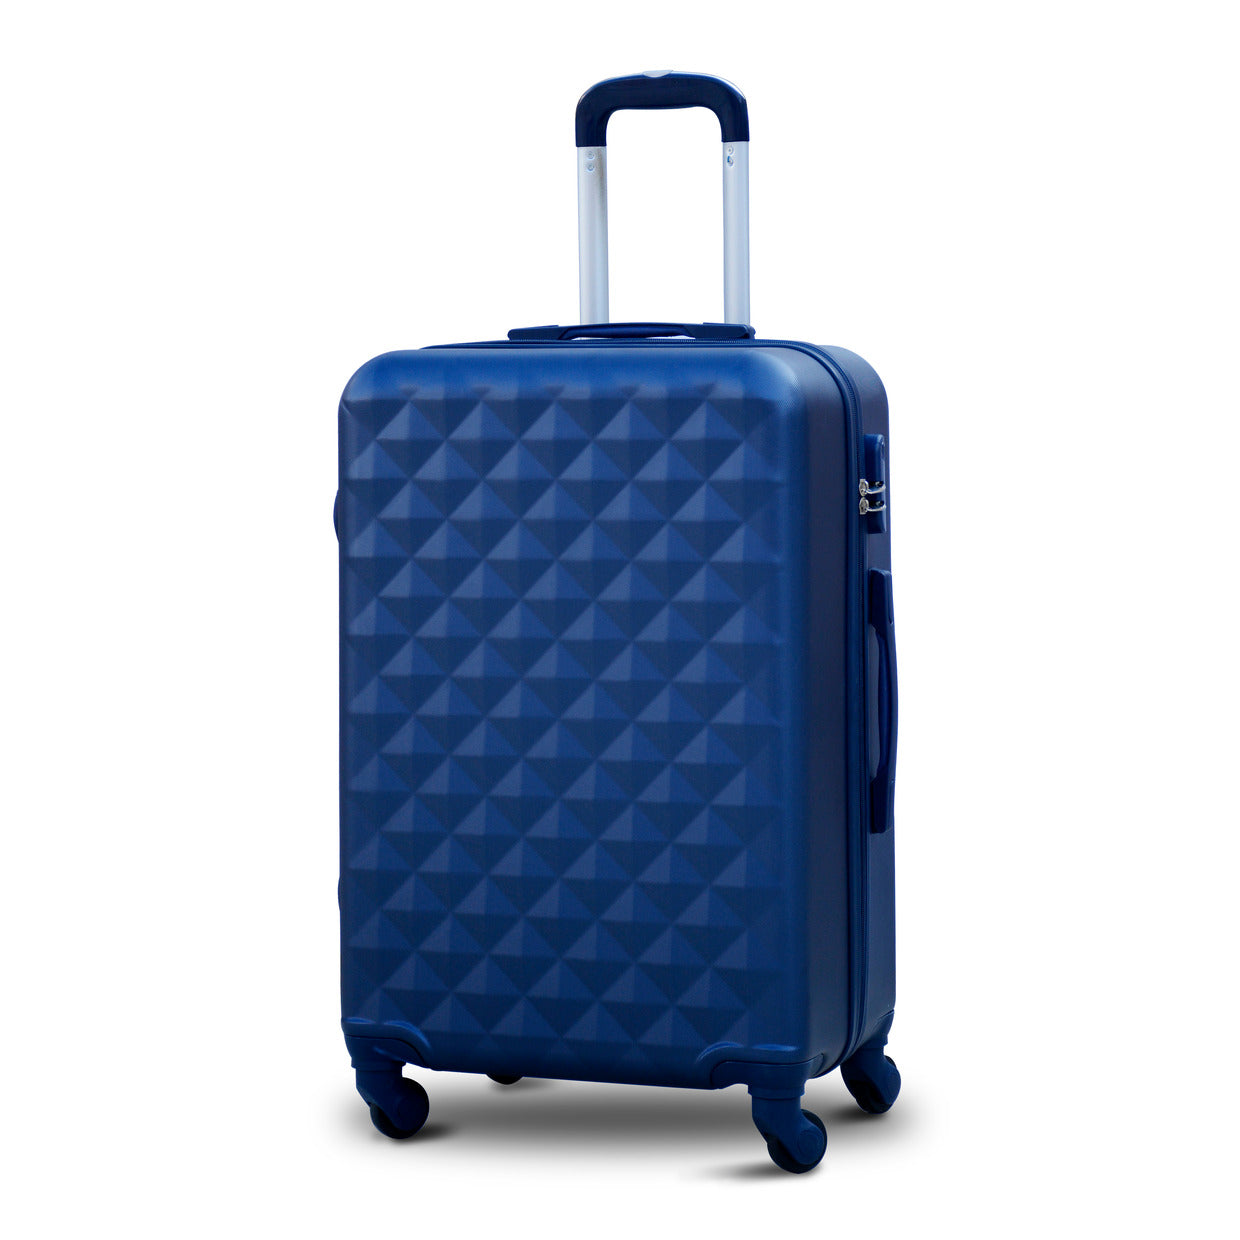 20" Blue Colour Diamond Cut ABS Luggage Lightweight Hard Case Trolley Bag Zaappy.com